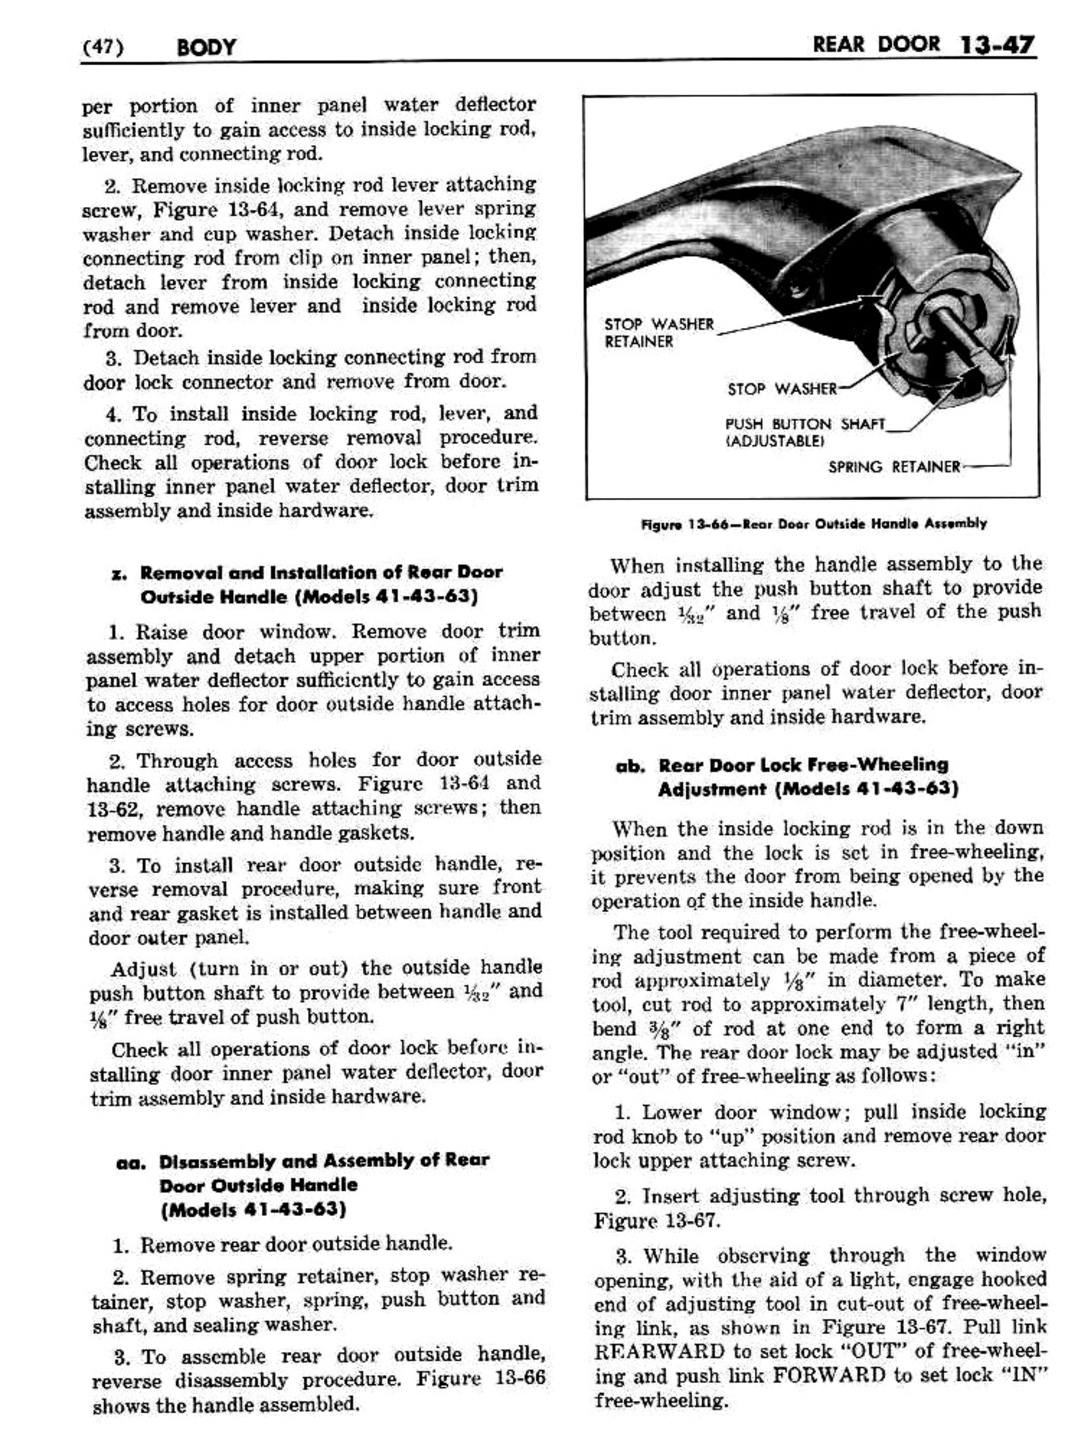 n_1958 Buick Body Service Manual-048-048.jpg